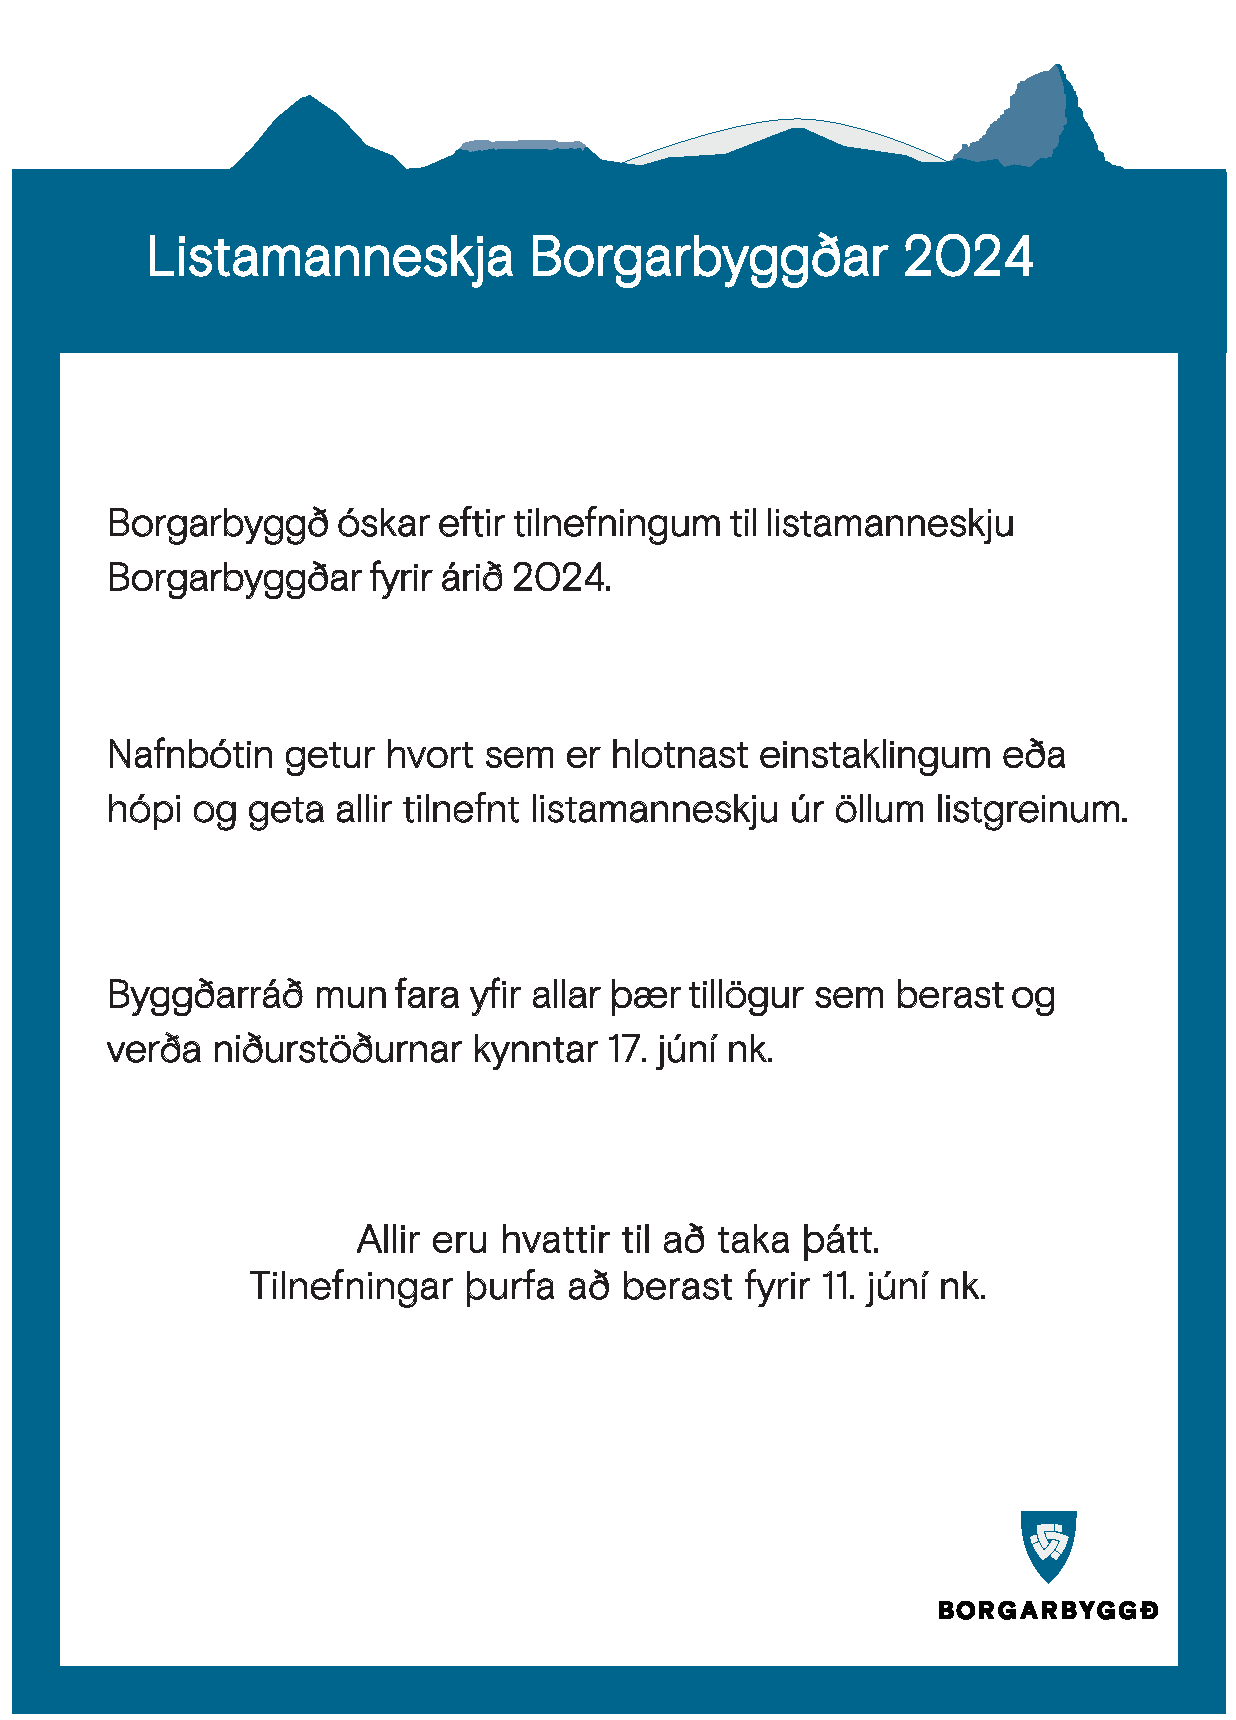 Featured image for “Listamanneskja Borgarbyggðar 2024”